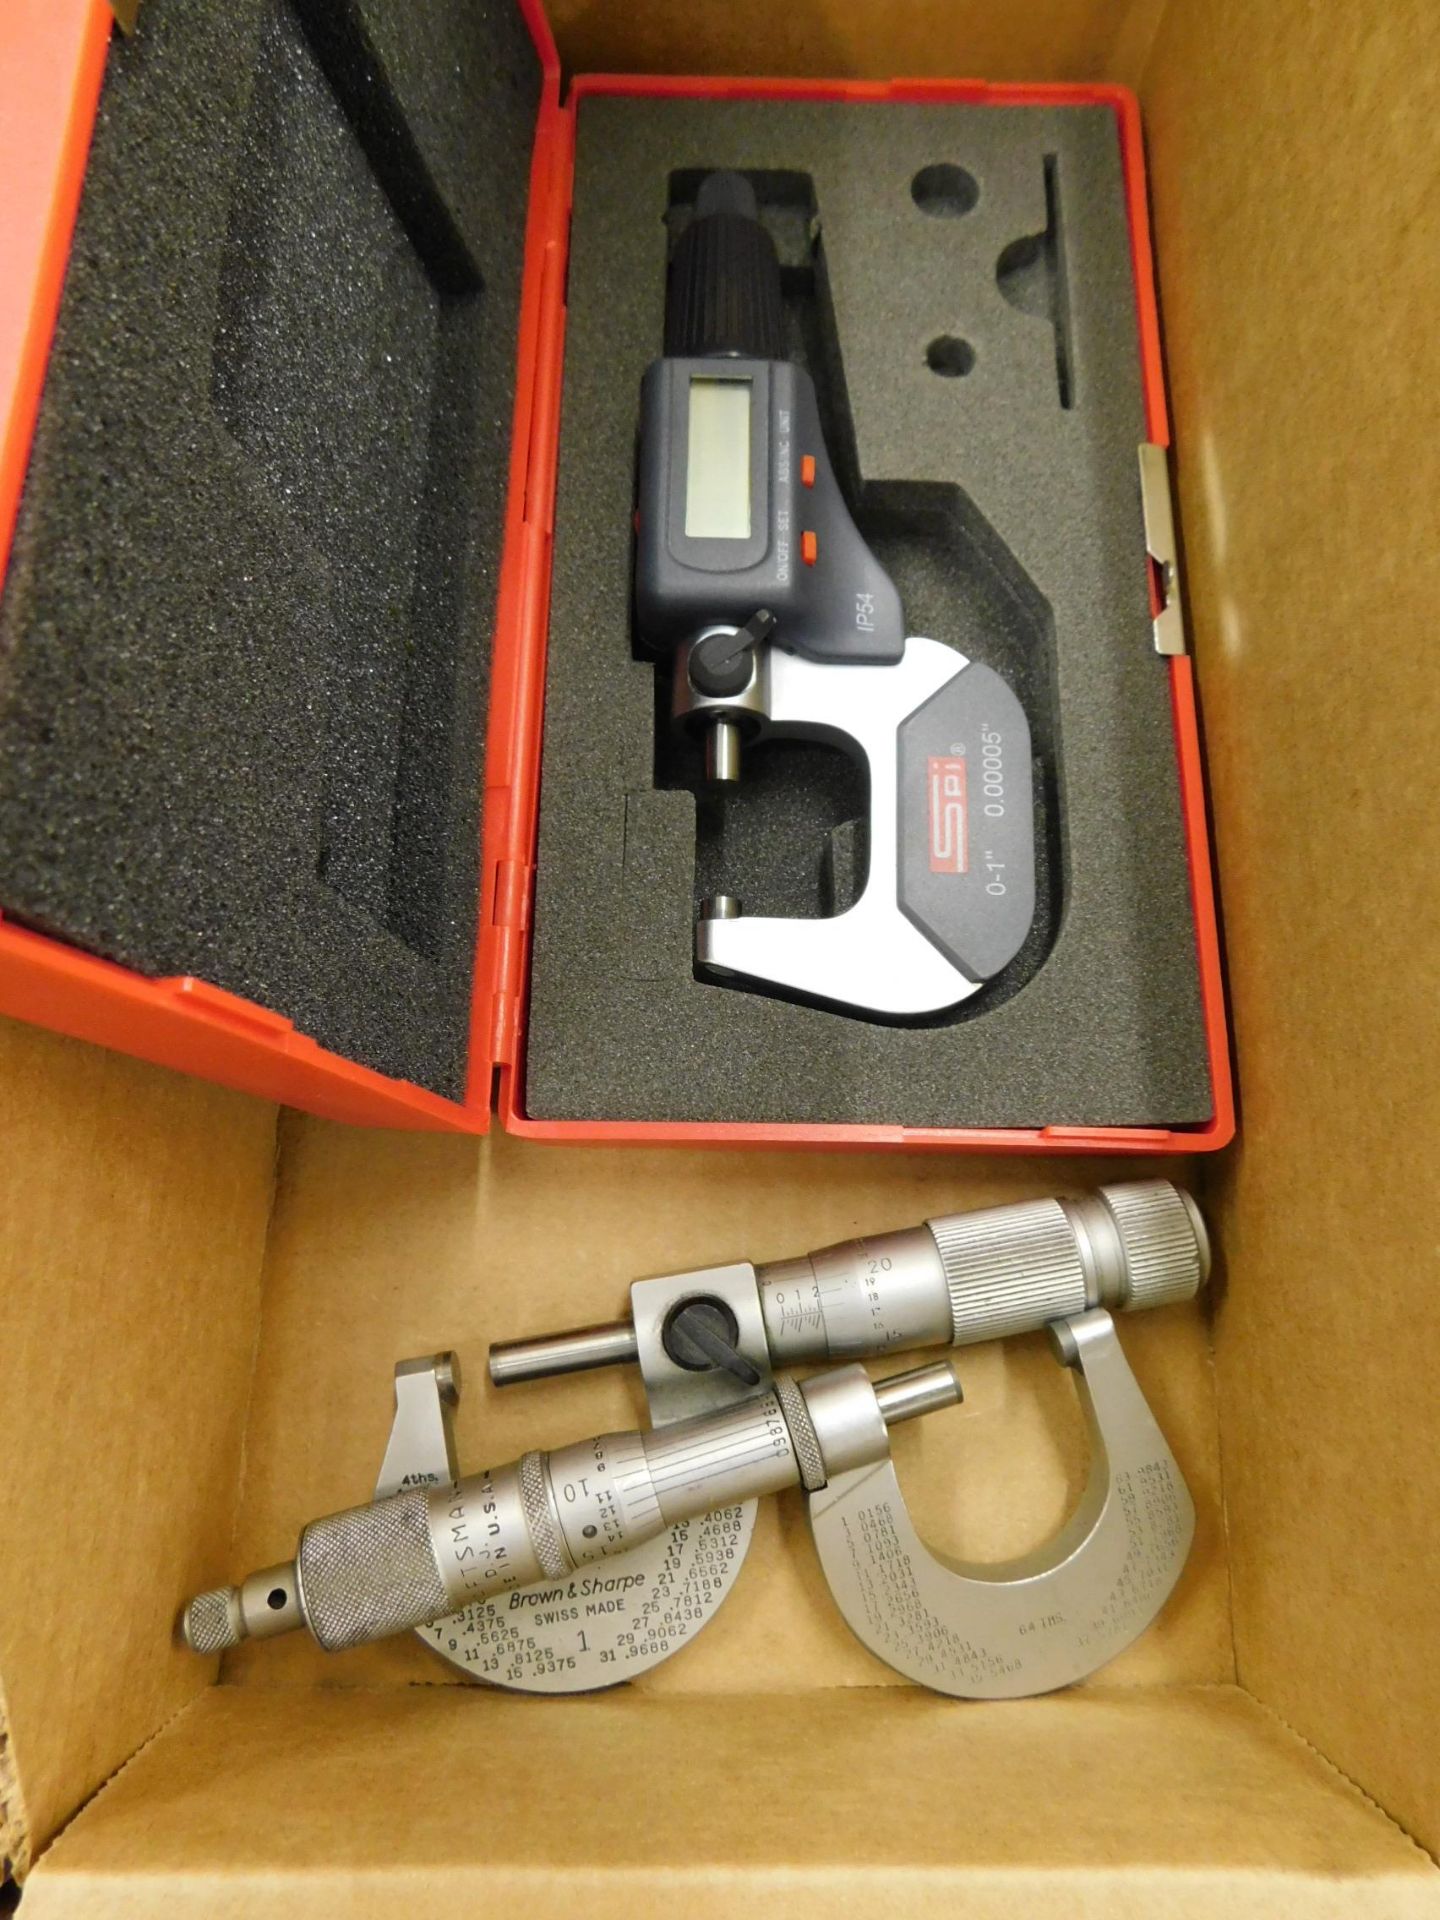 SPI 0-1" Digital Micrometer, and (2) 0-1" Micrometers